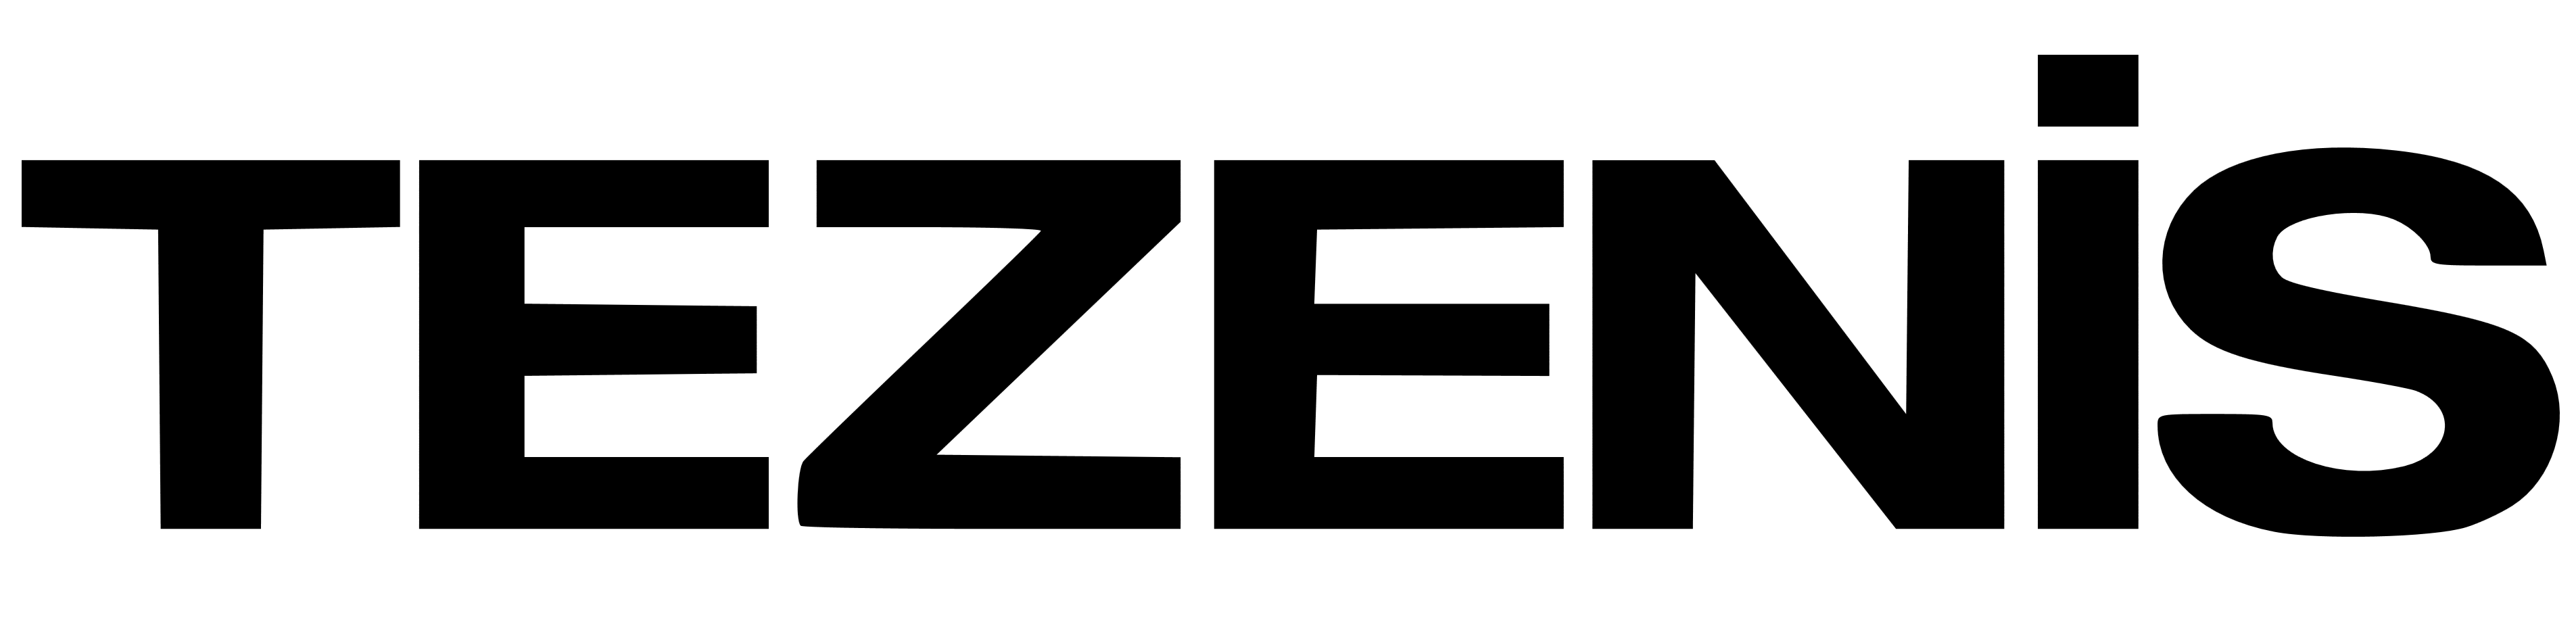 Tezenis logo, logotype